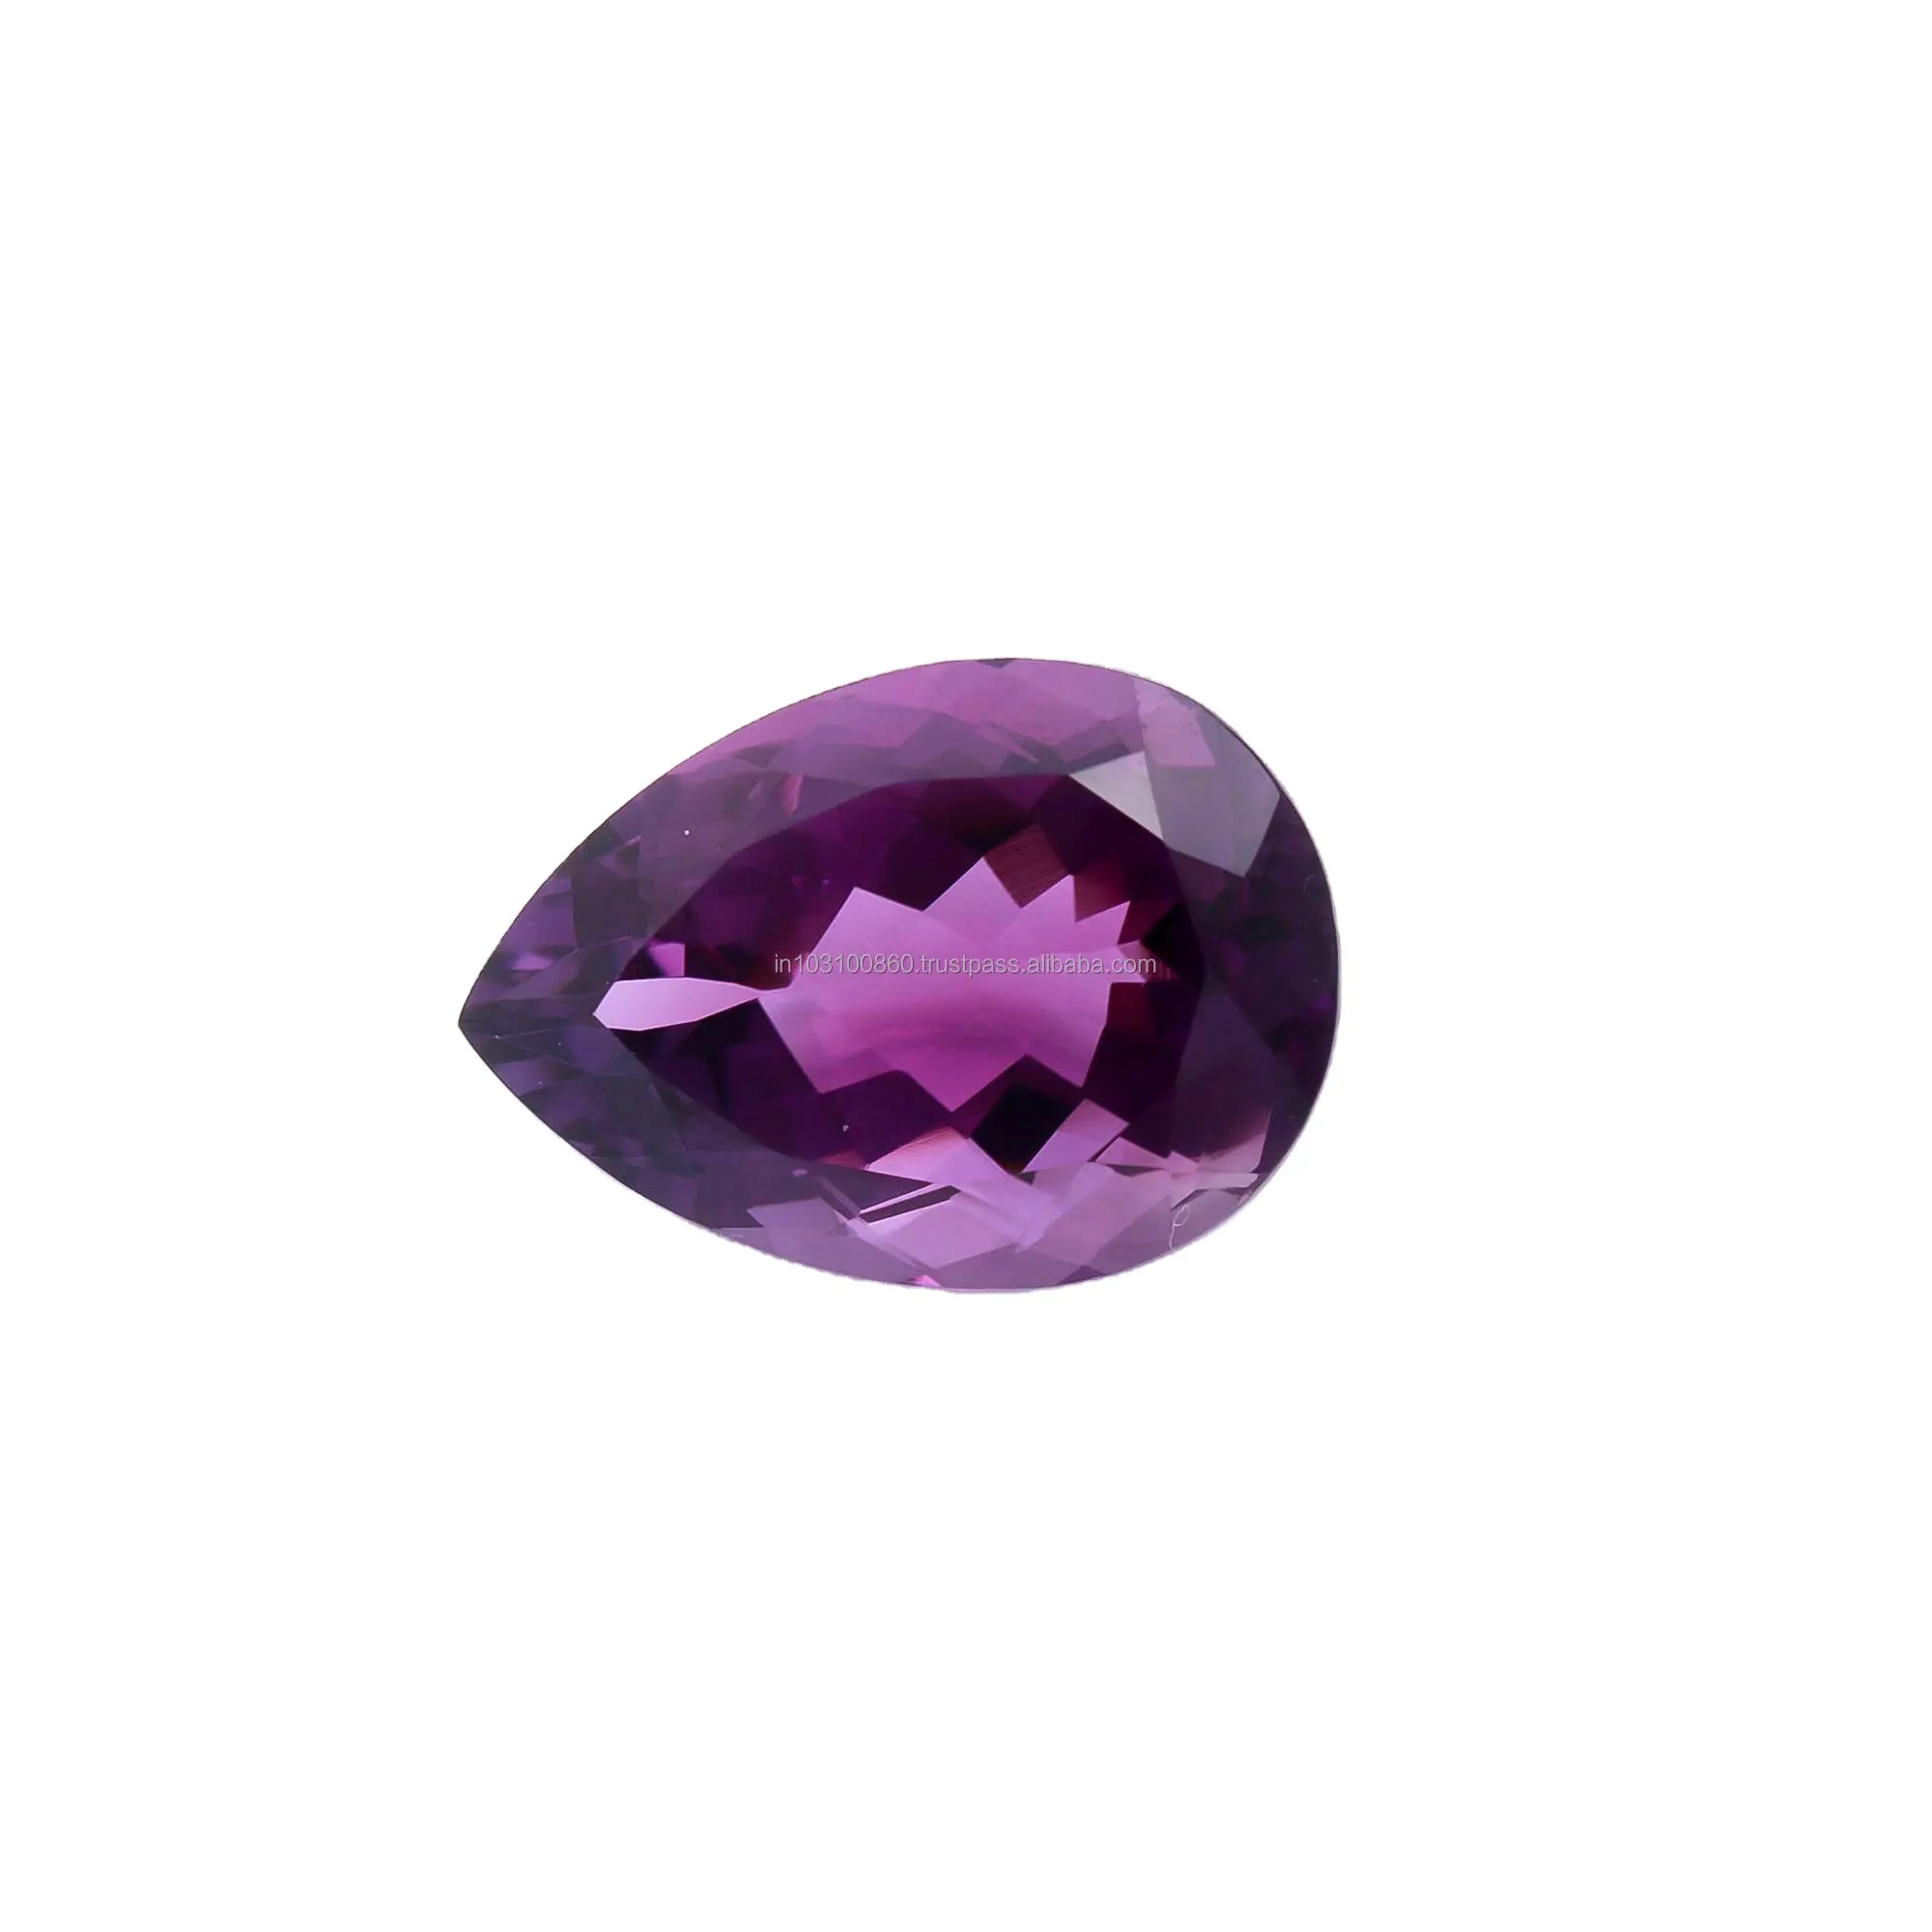 Pear berbentuk batu permata ungu kualitas terbaik alami pemotongan segi batu permata longgar grosir cincin anting membuat perhiasan